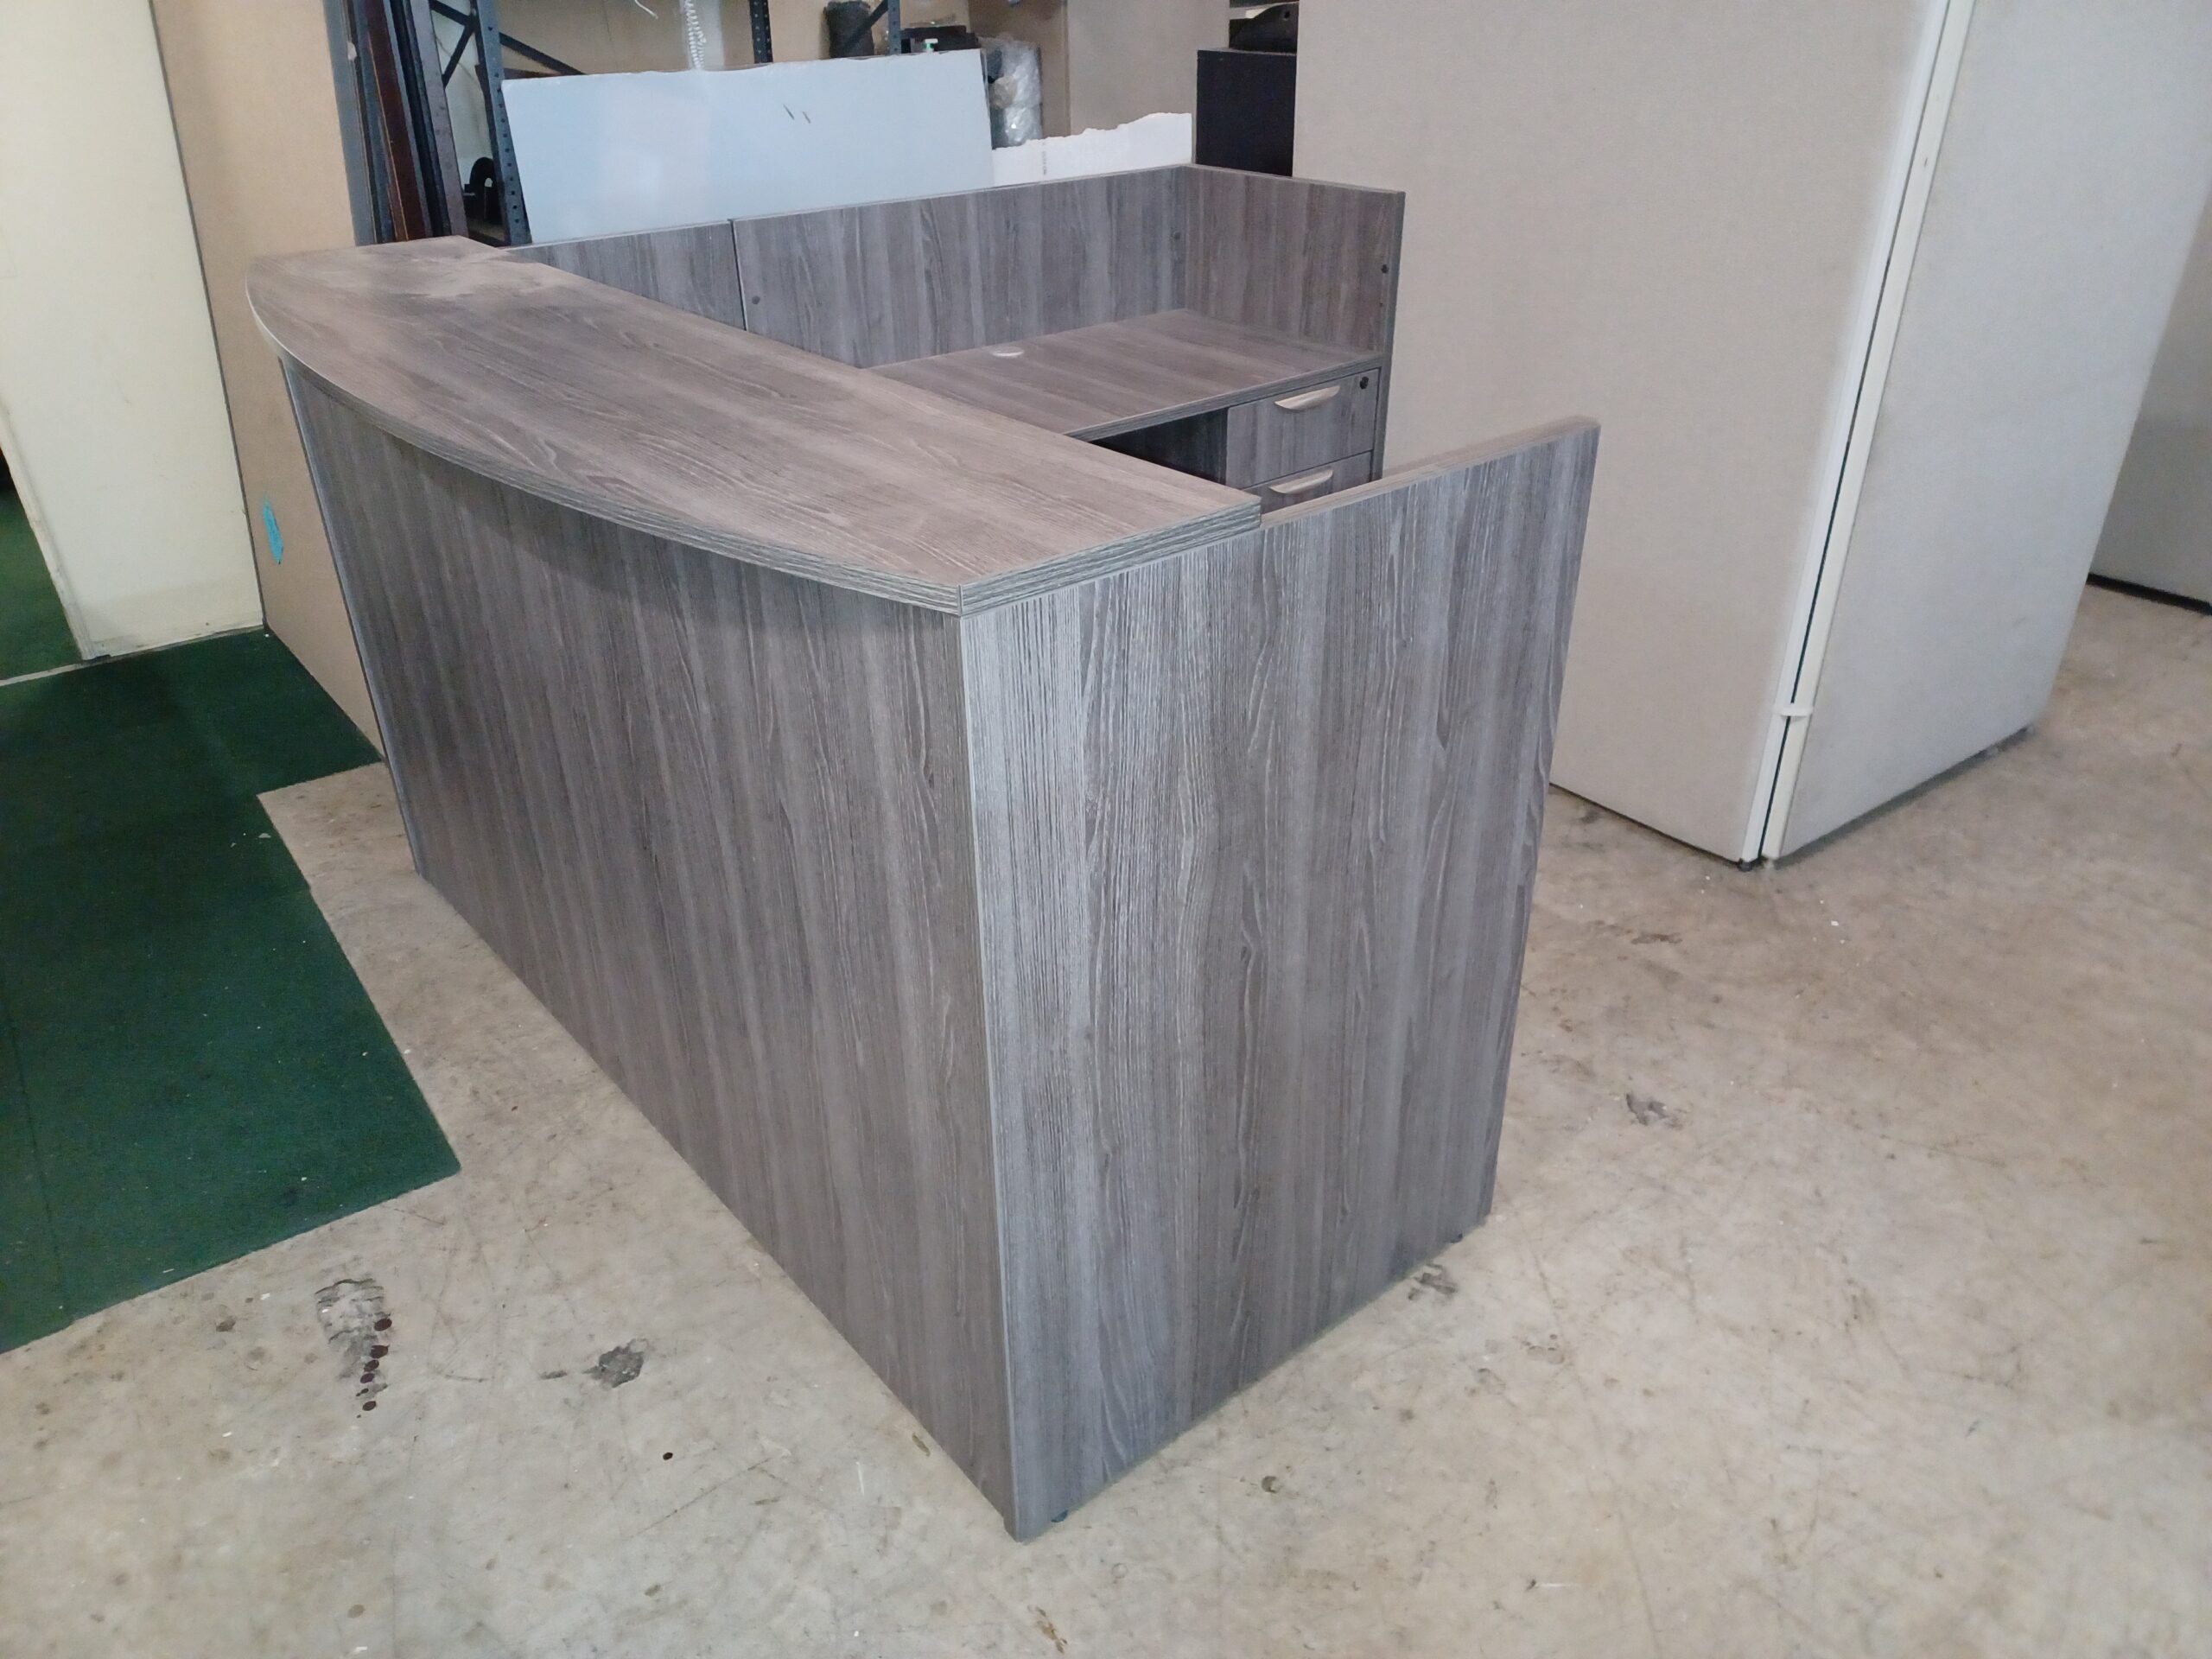 6' Reception desk with right return gray